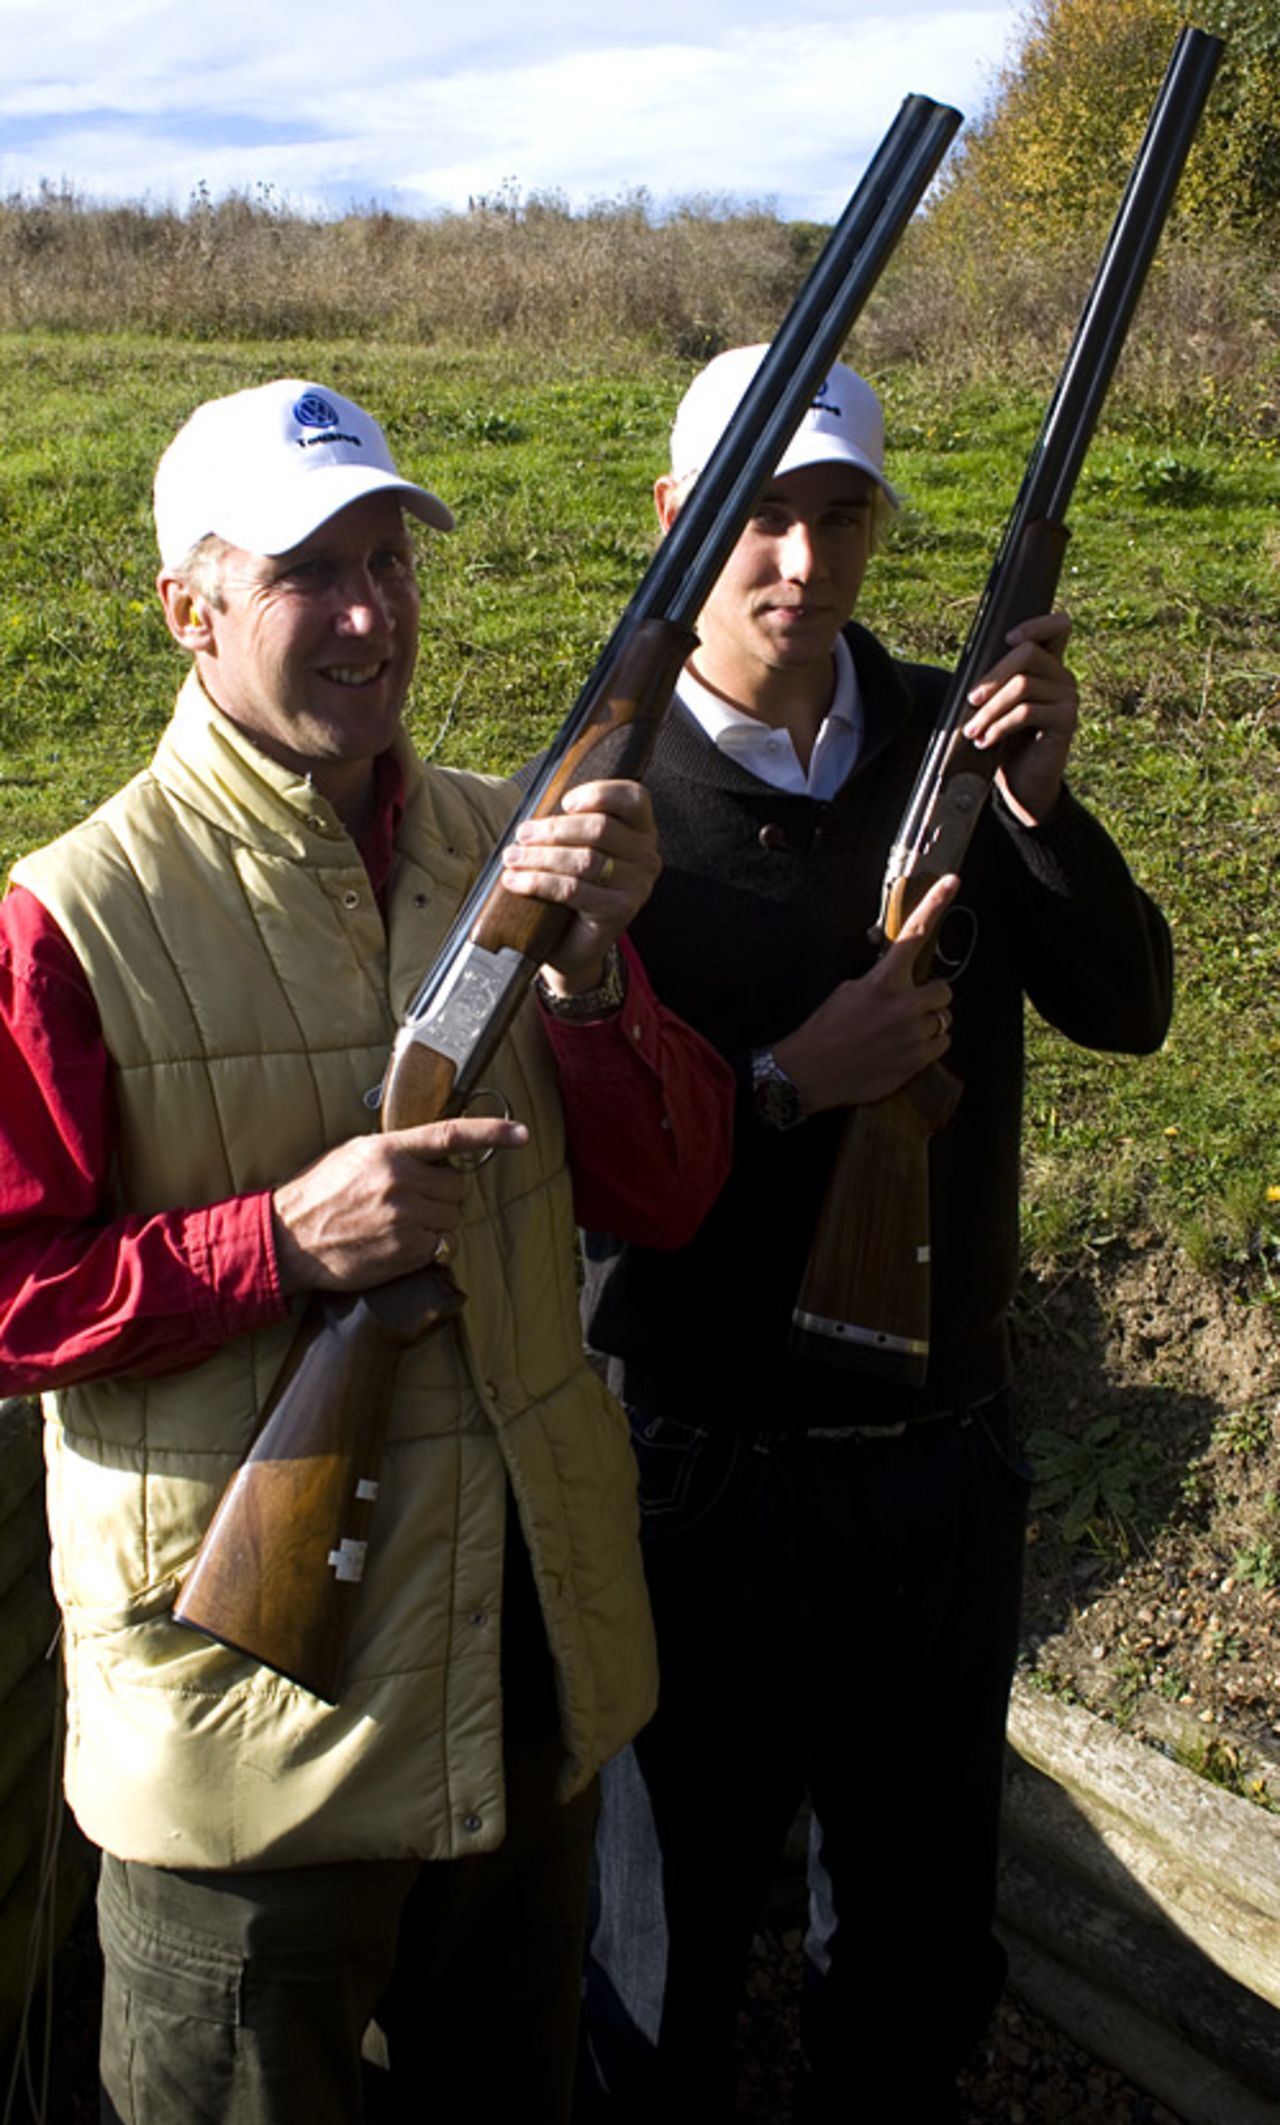 Chris and Stuart Broad pose with shotguns, West London Shooting School, November 1, 2007